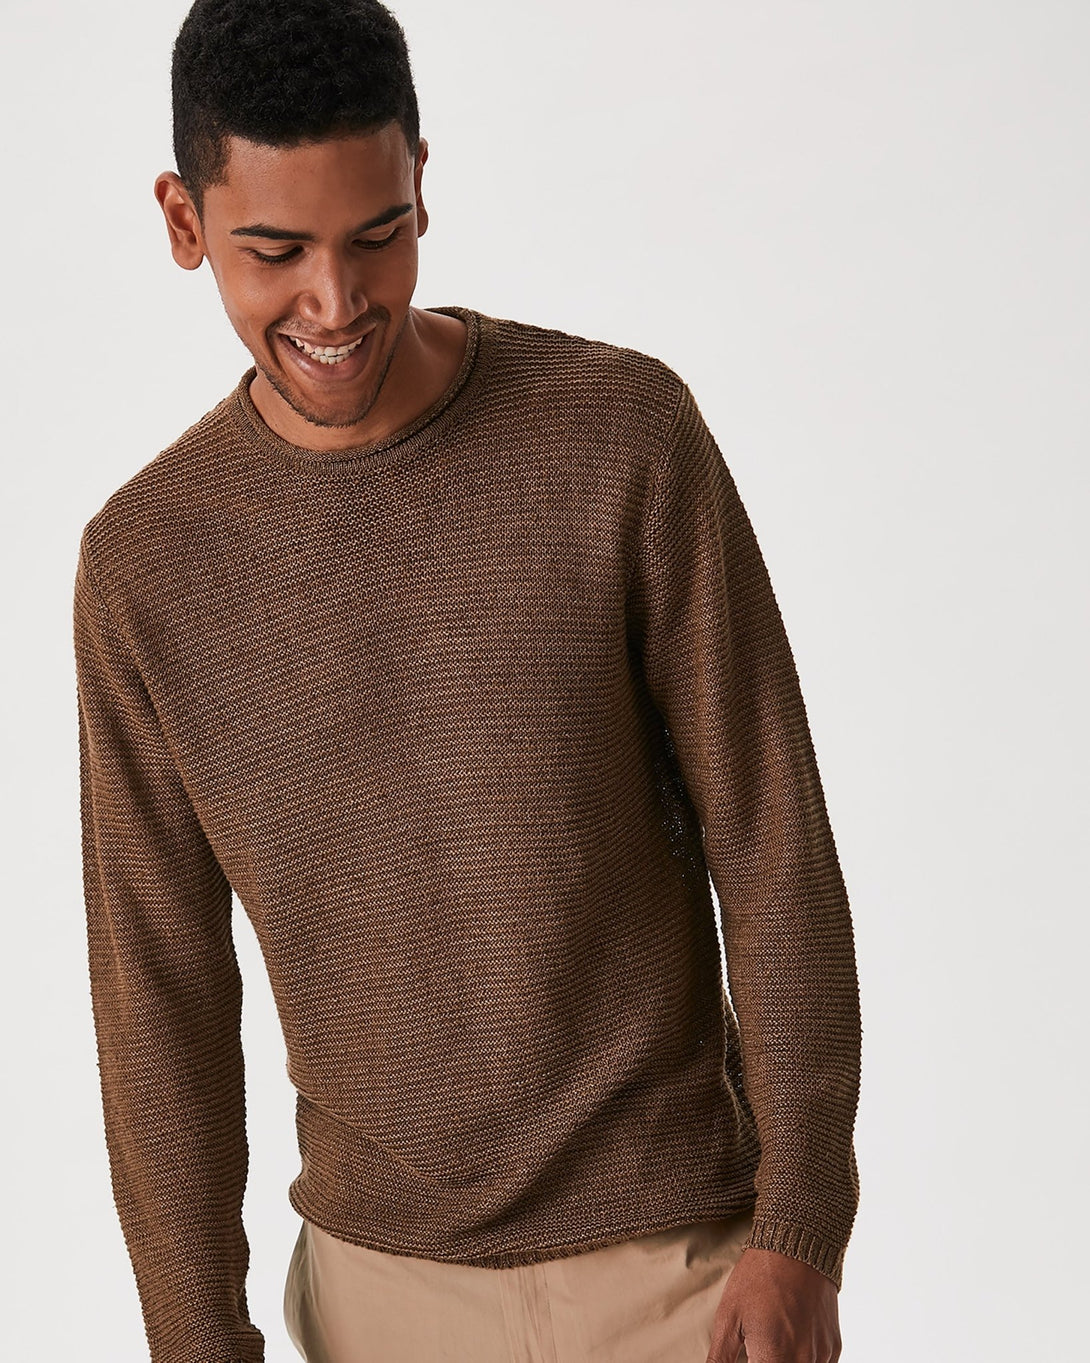 Men Jersey | Taupe Rustic Linen Crew Neck Sweater by Spanish designer Adolfo Dominguez